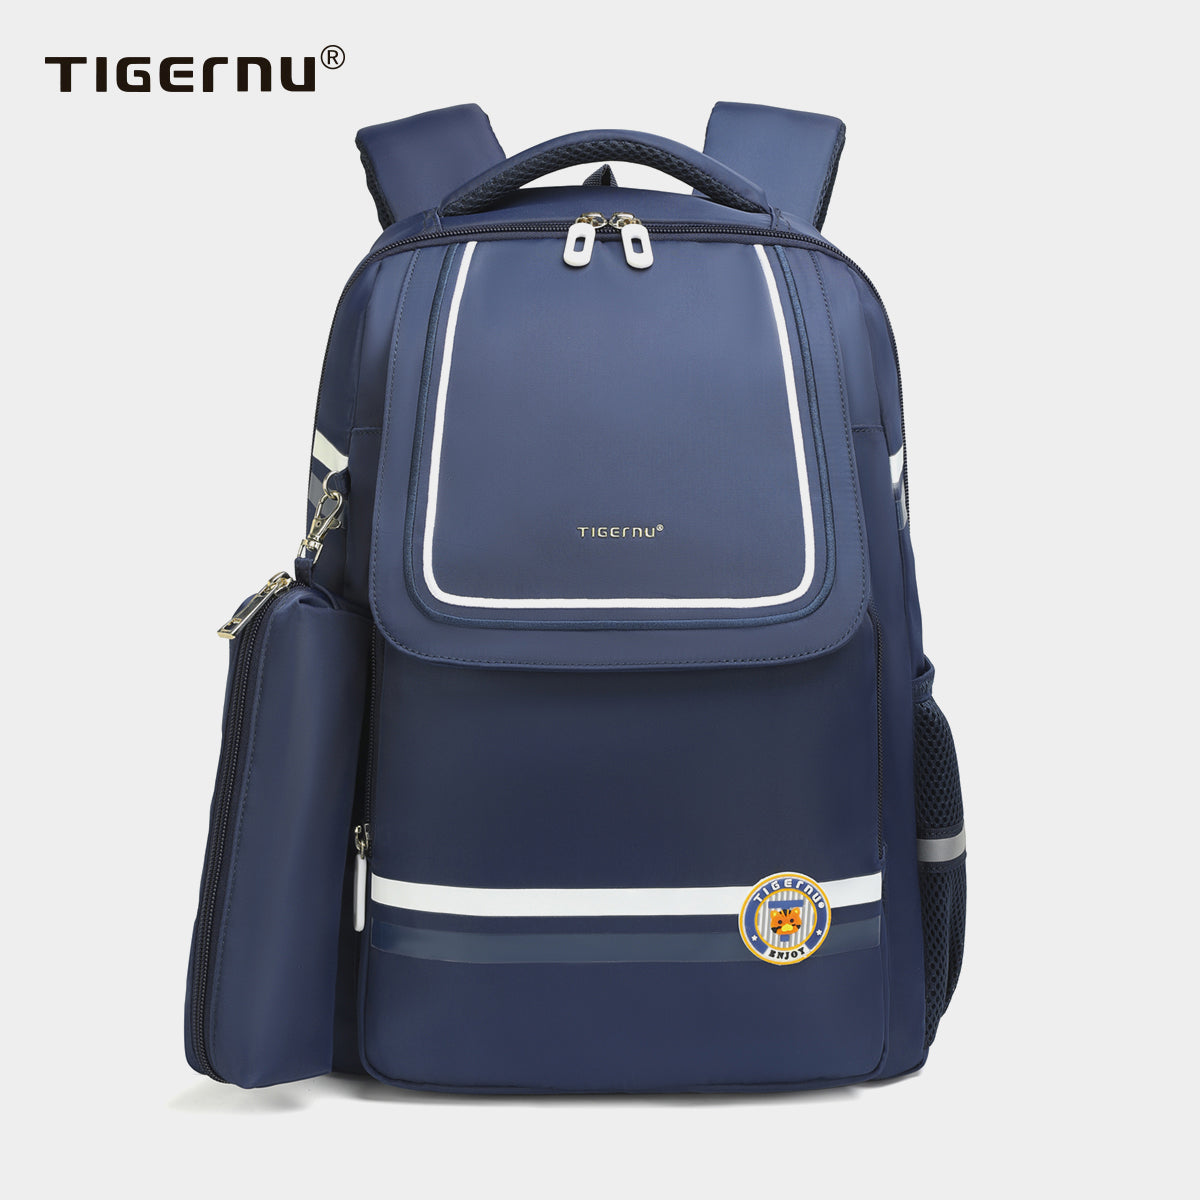 Tigernu T-B9037 light weight reflective stripe bag school backpacks stylish student backpack